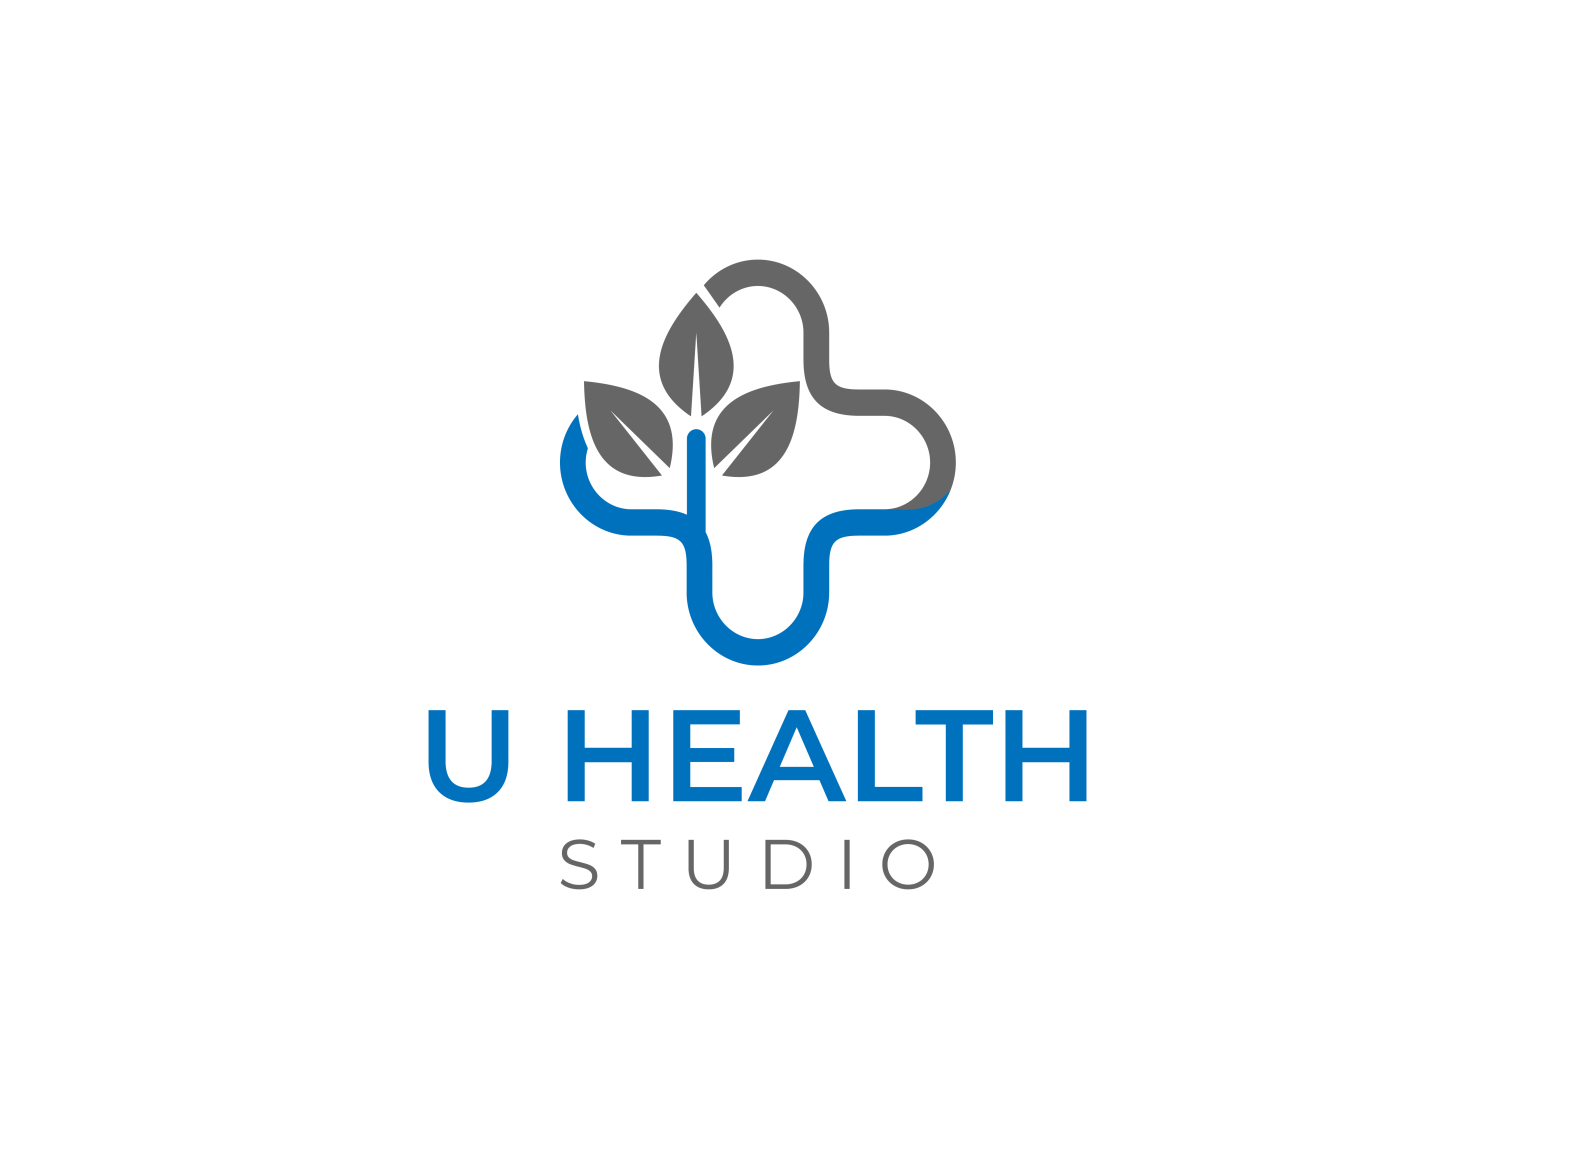 Health logo by Sumaiya Afrin on Dribbble